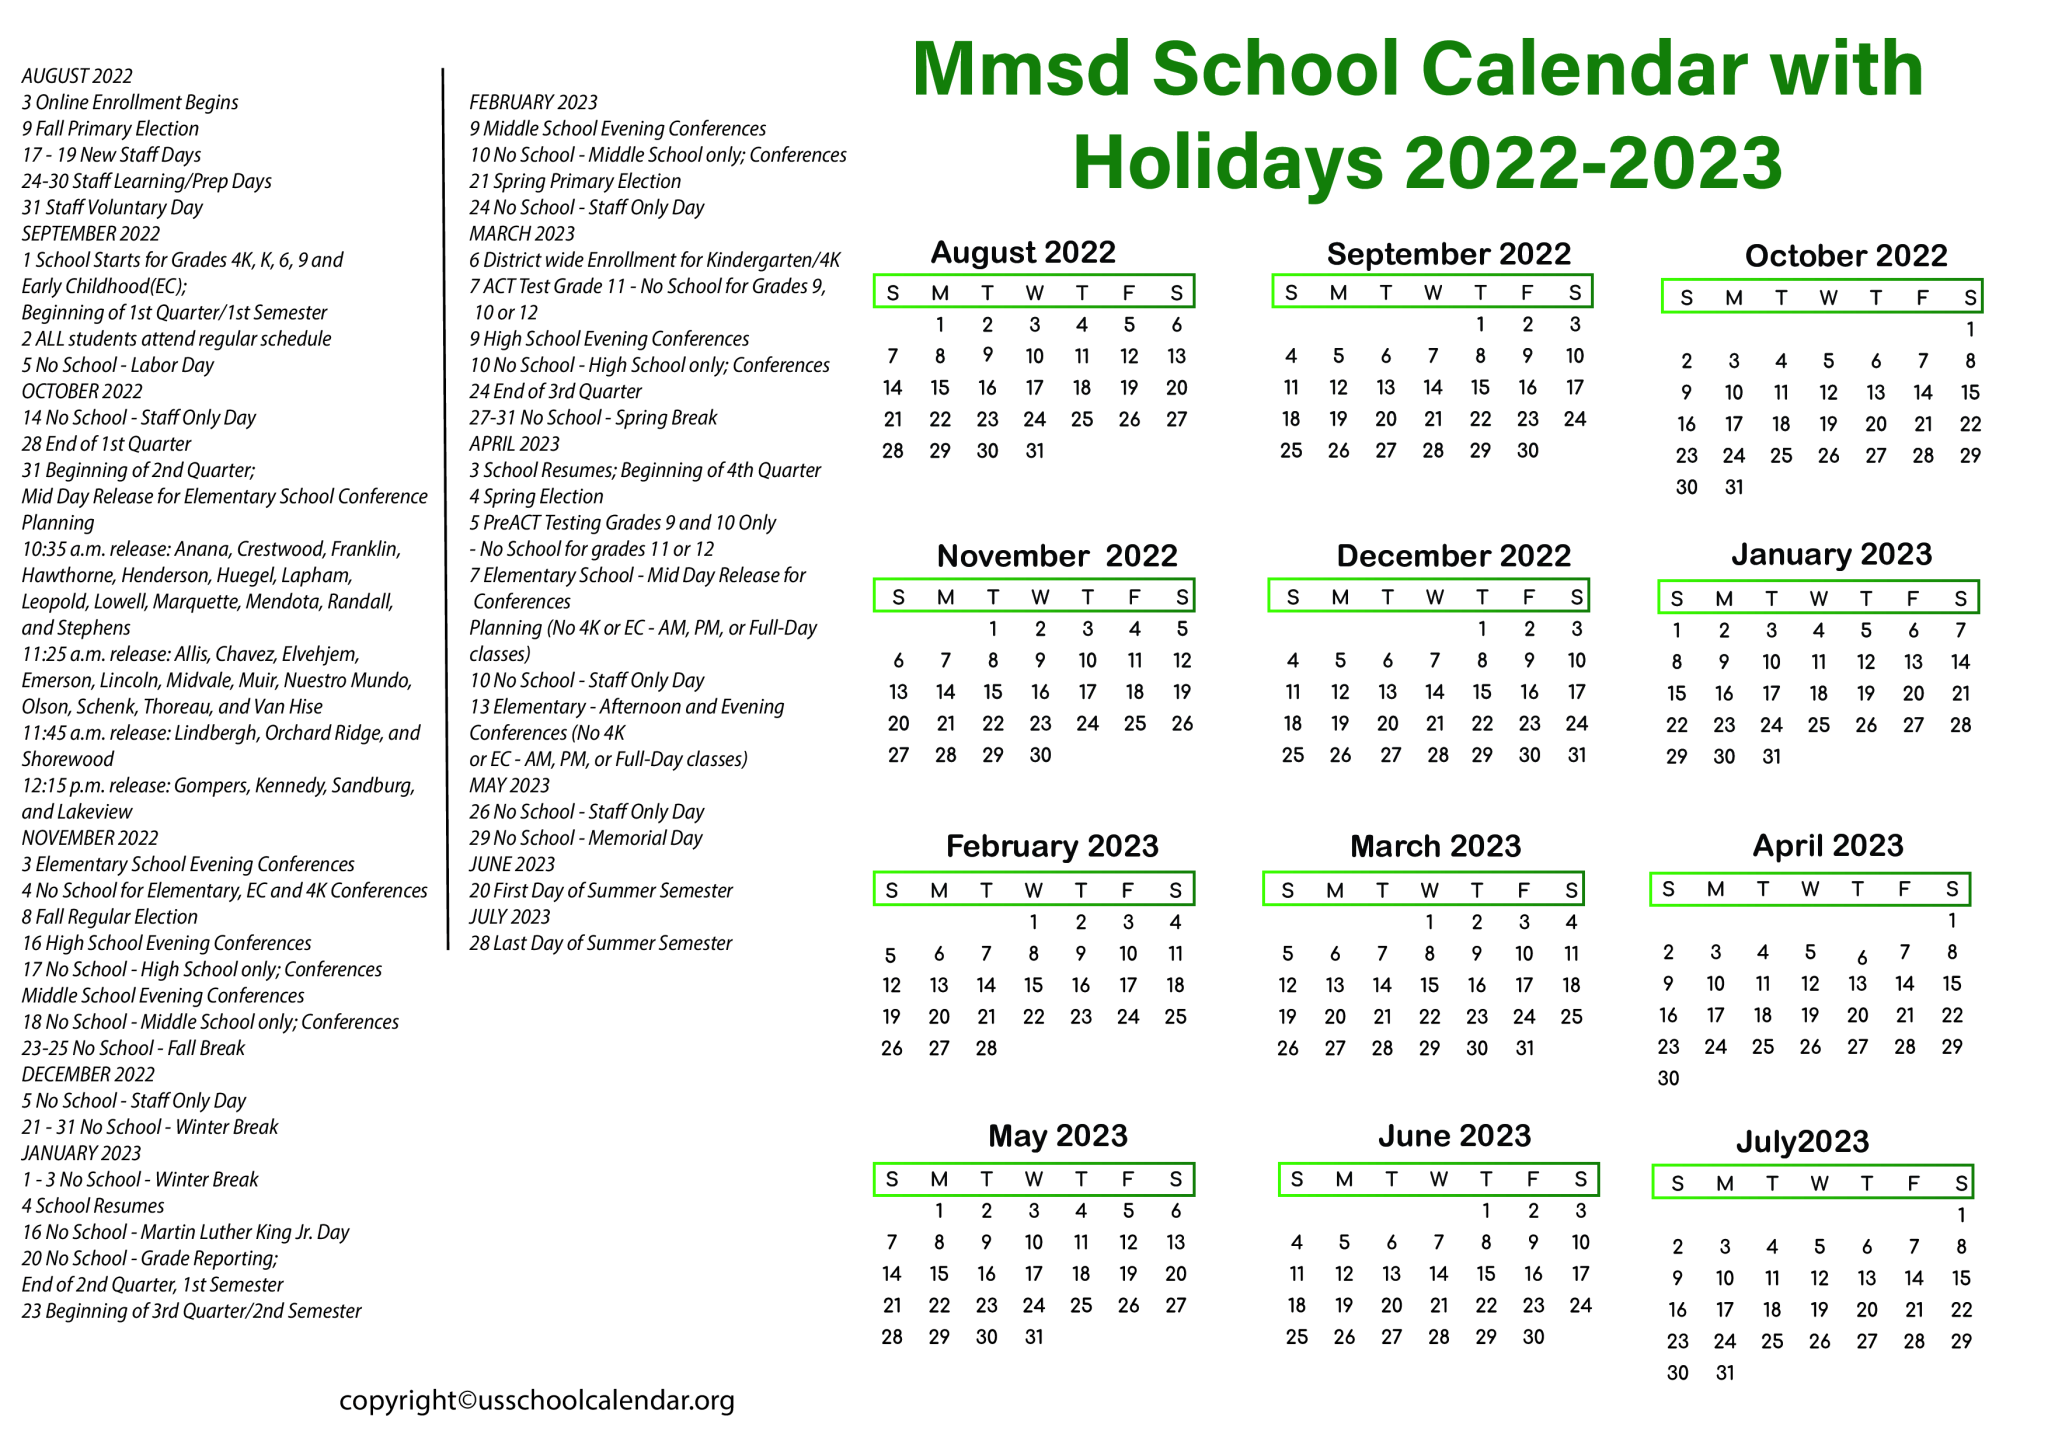 [Madison Metropolitan] MMSD School Calendar with Holidays 2023